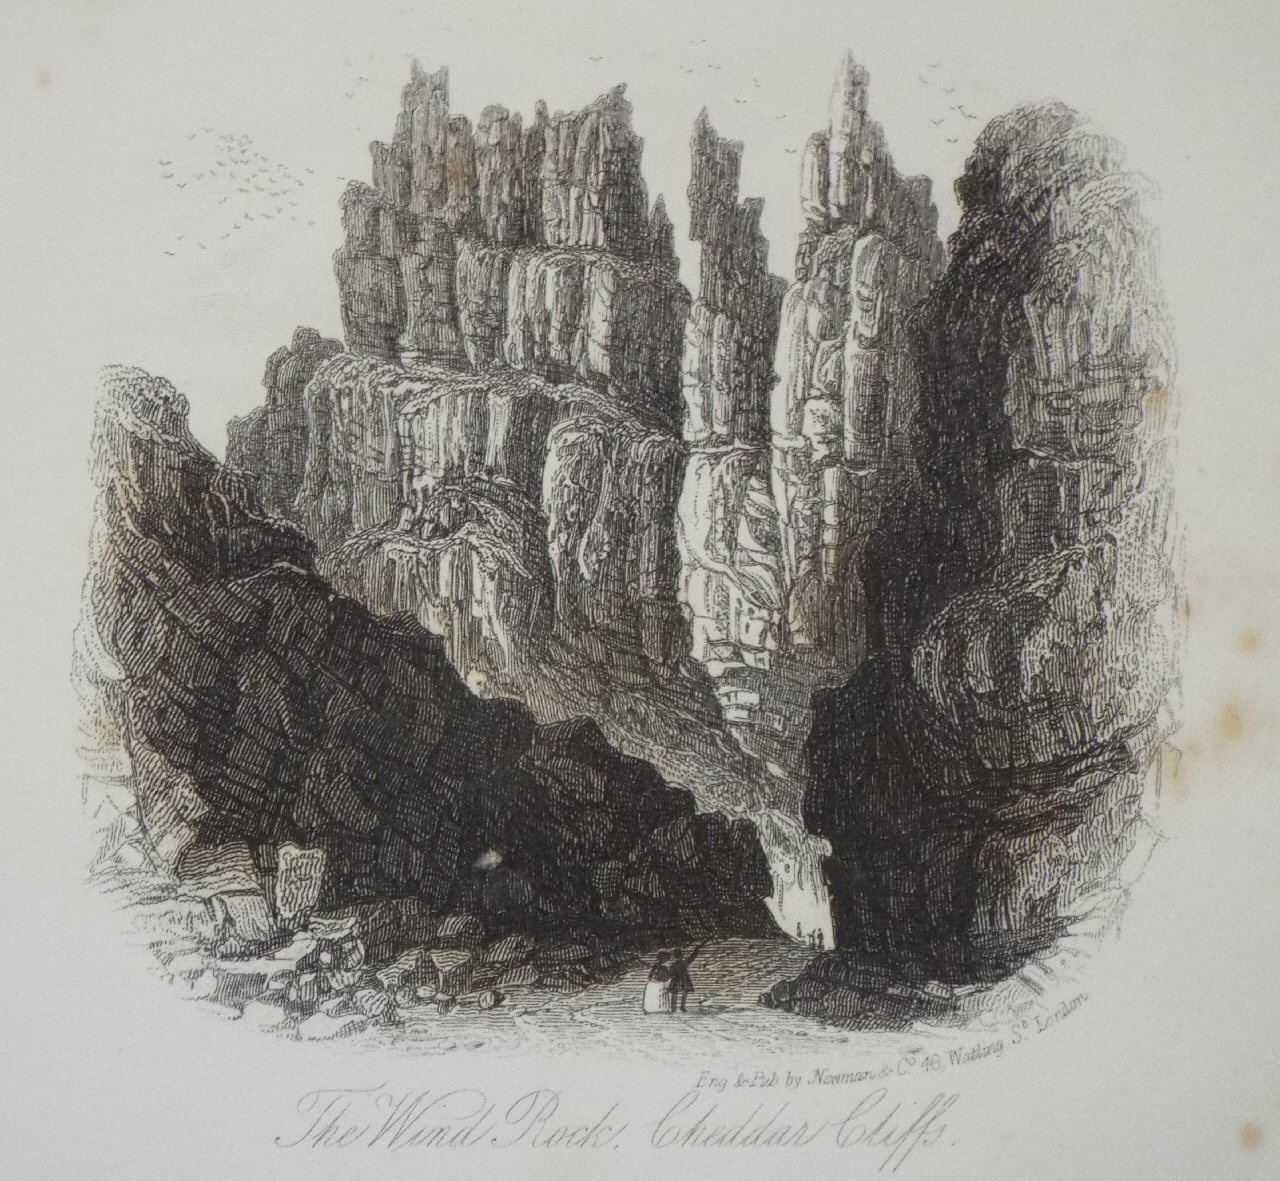 Steel Vignette - The Wind Rock, Cheddar Cliffs - Newman